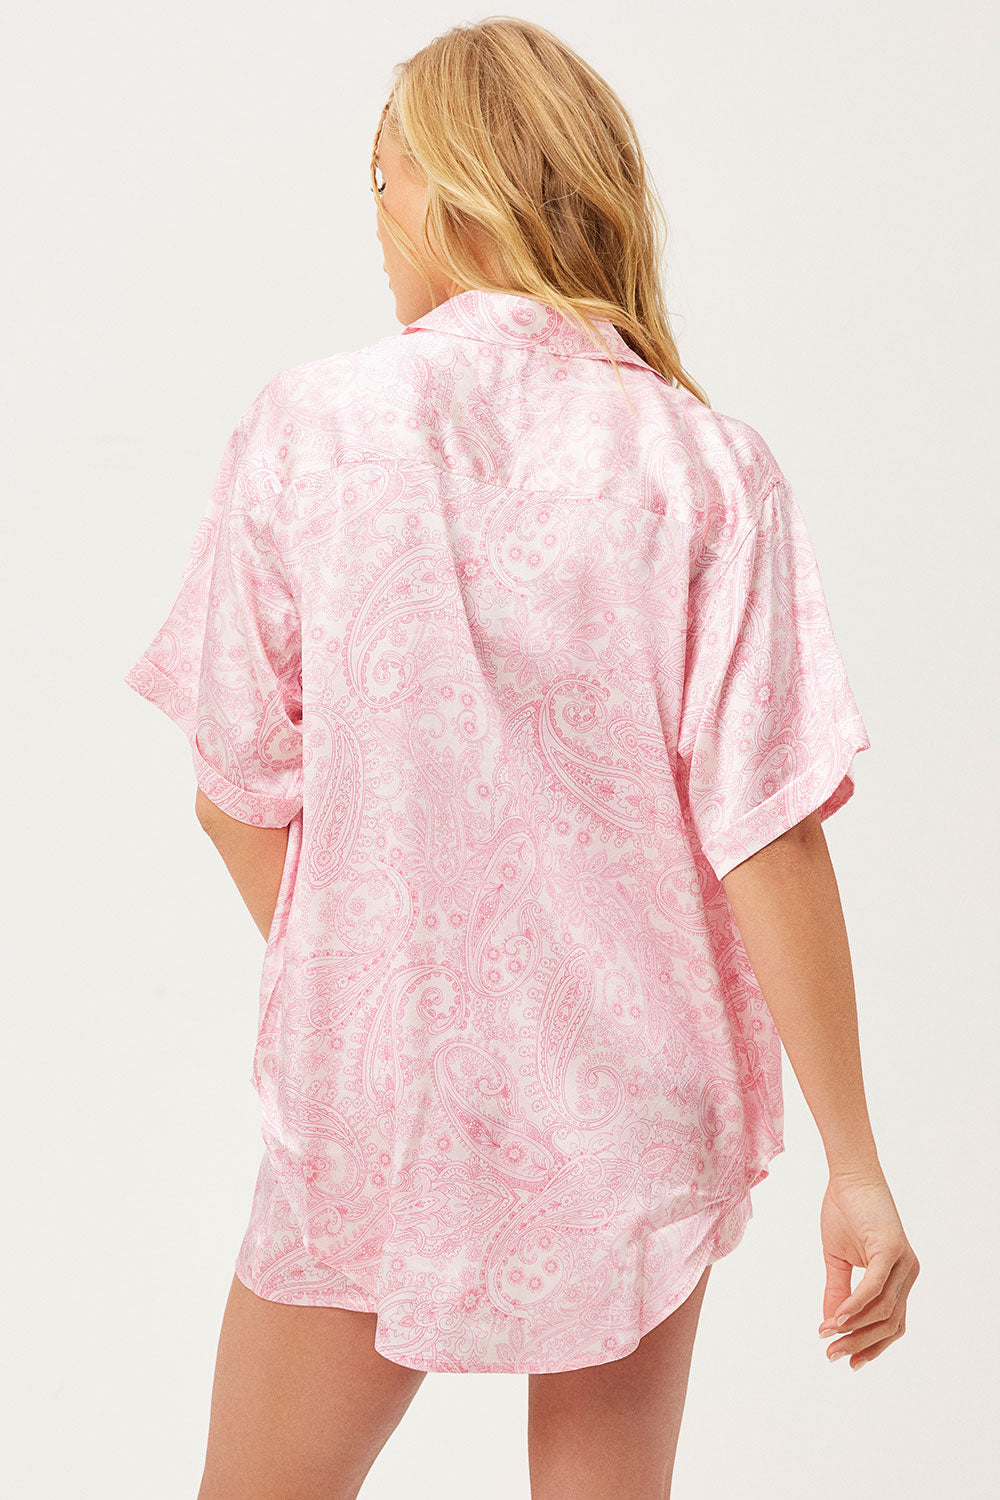 Fifi Silk Button Up Shirt - Pink Paisley